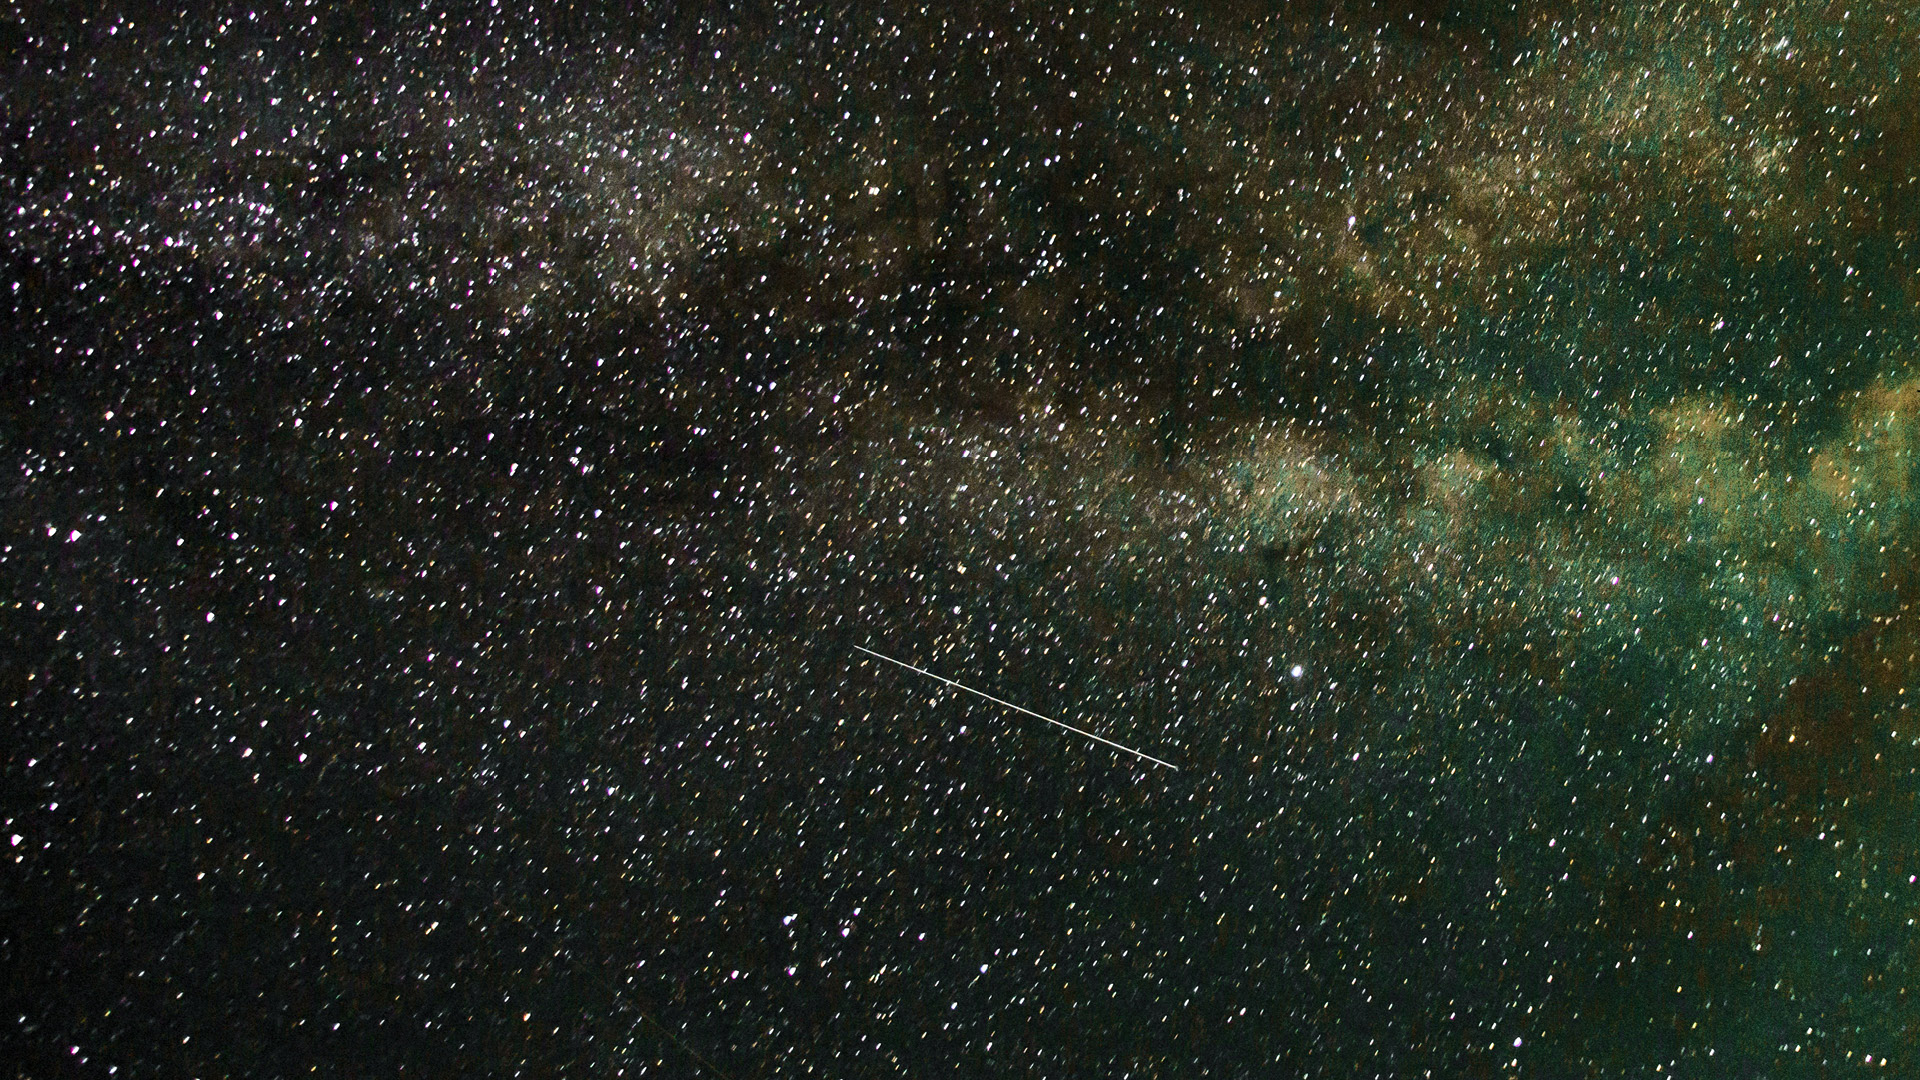 Astronomy evening: Perseids shooting star night